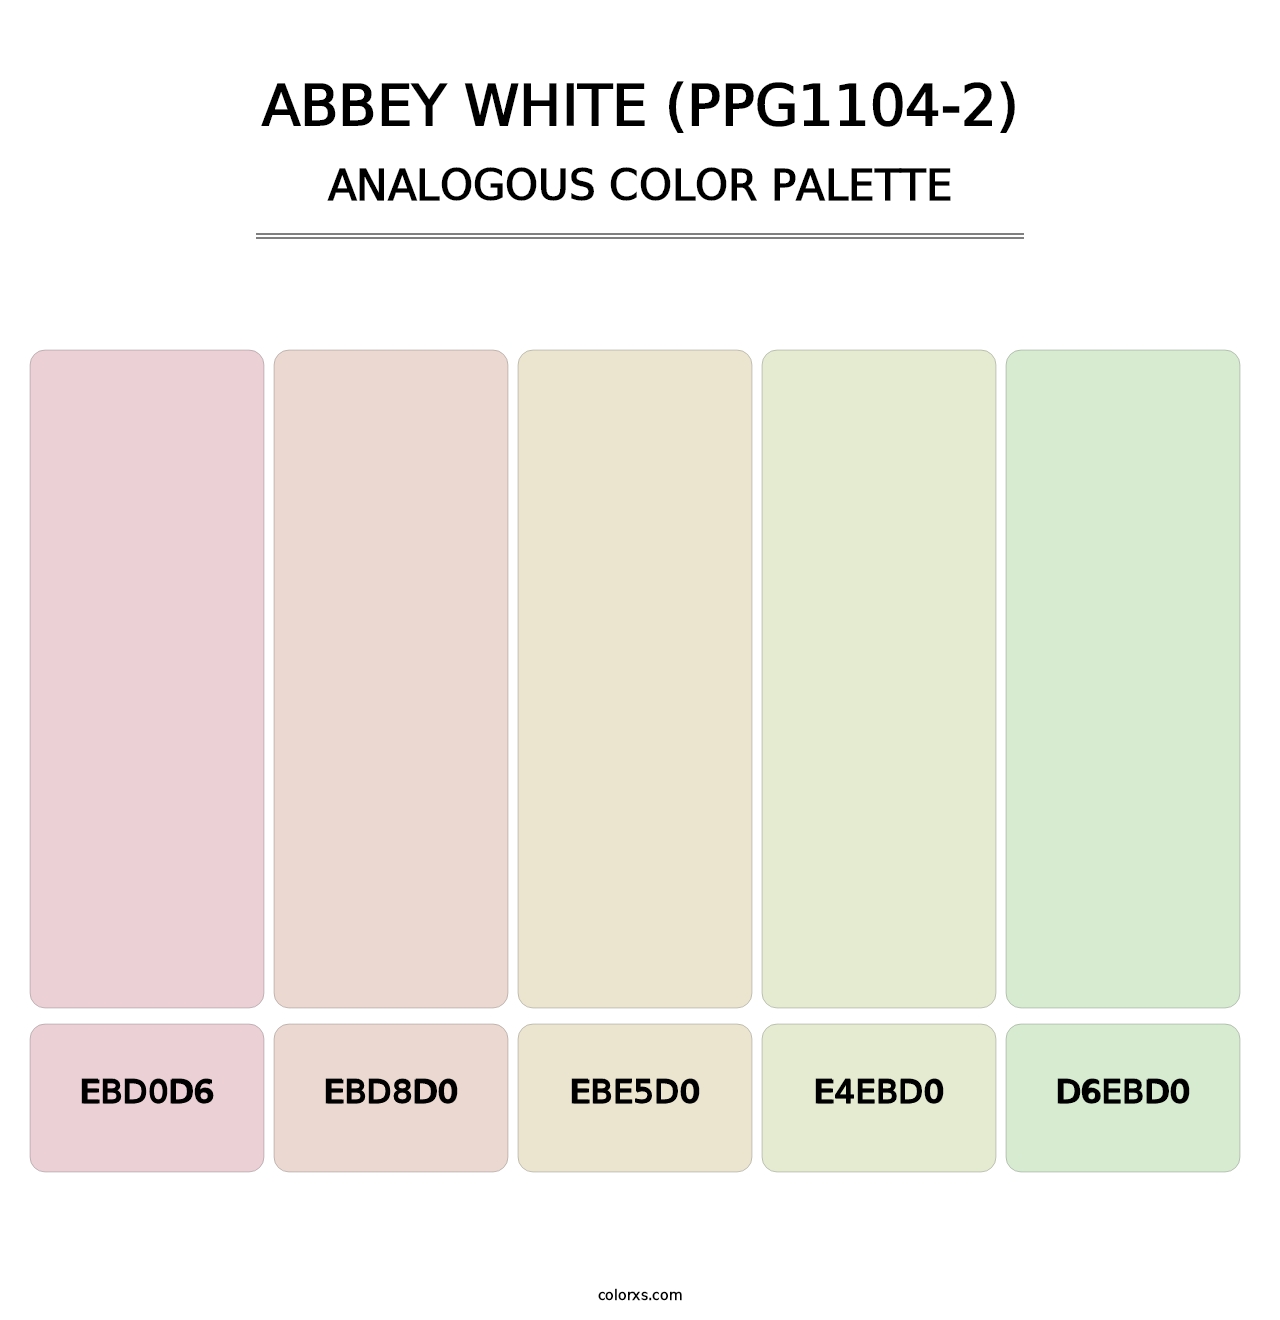 Abbey White (PPG1104-2) - Analogous Color Palette